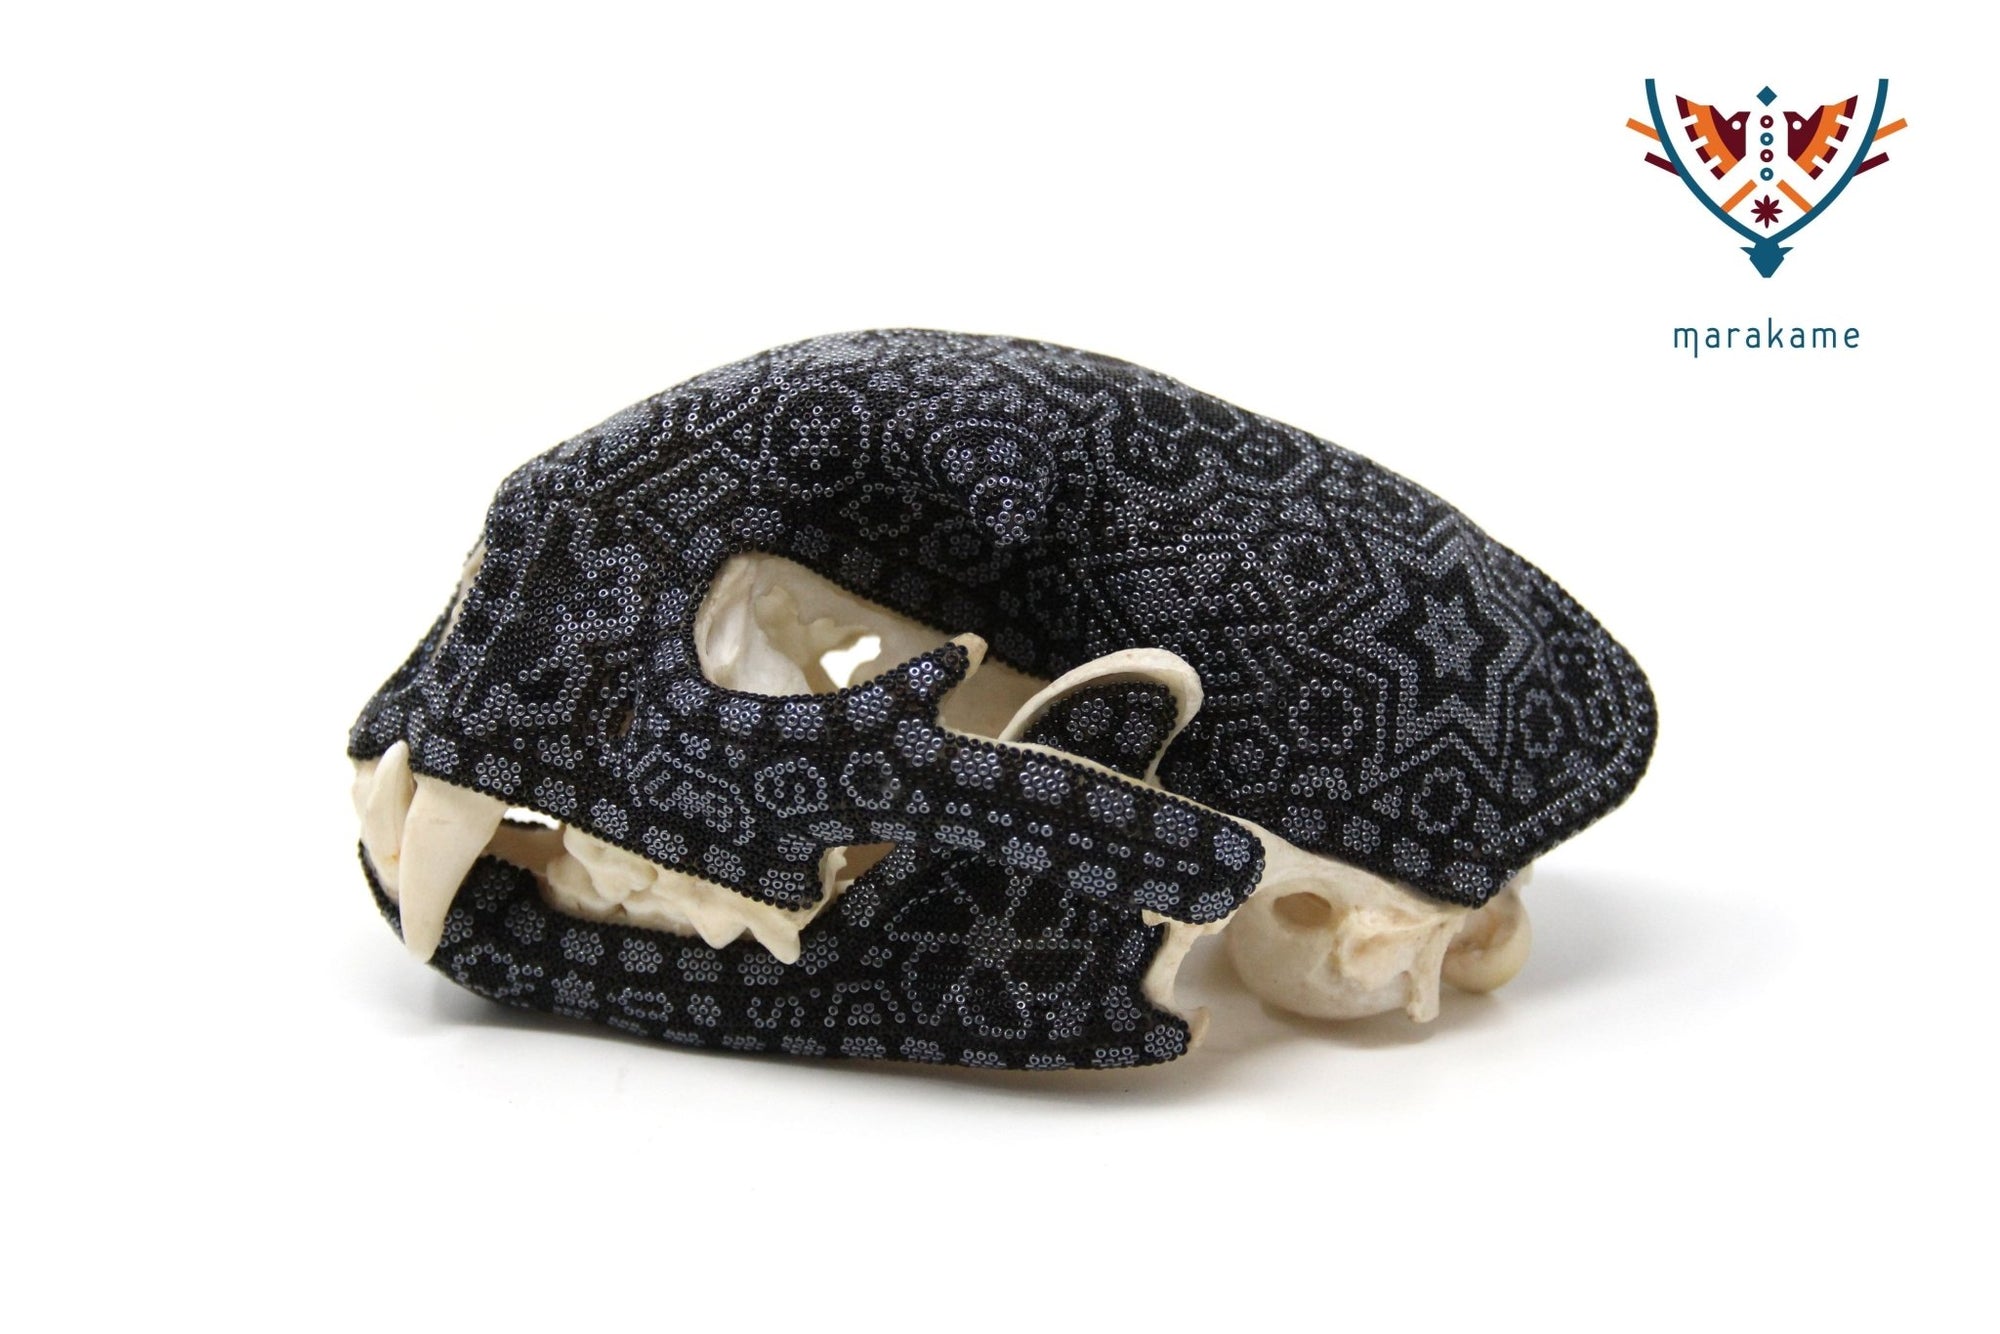 Cráneo de gato - Aikutsita I - Arte Huichol - Marakame